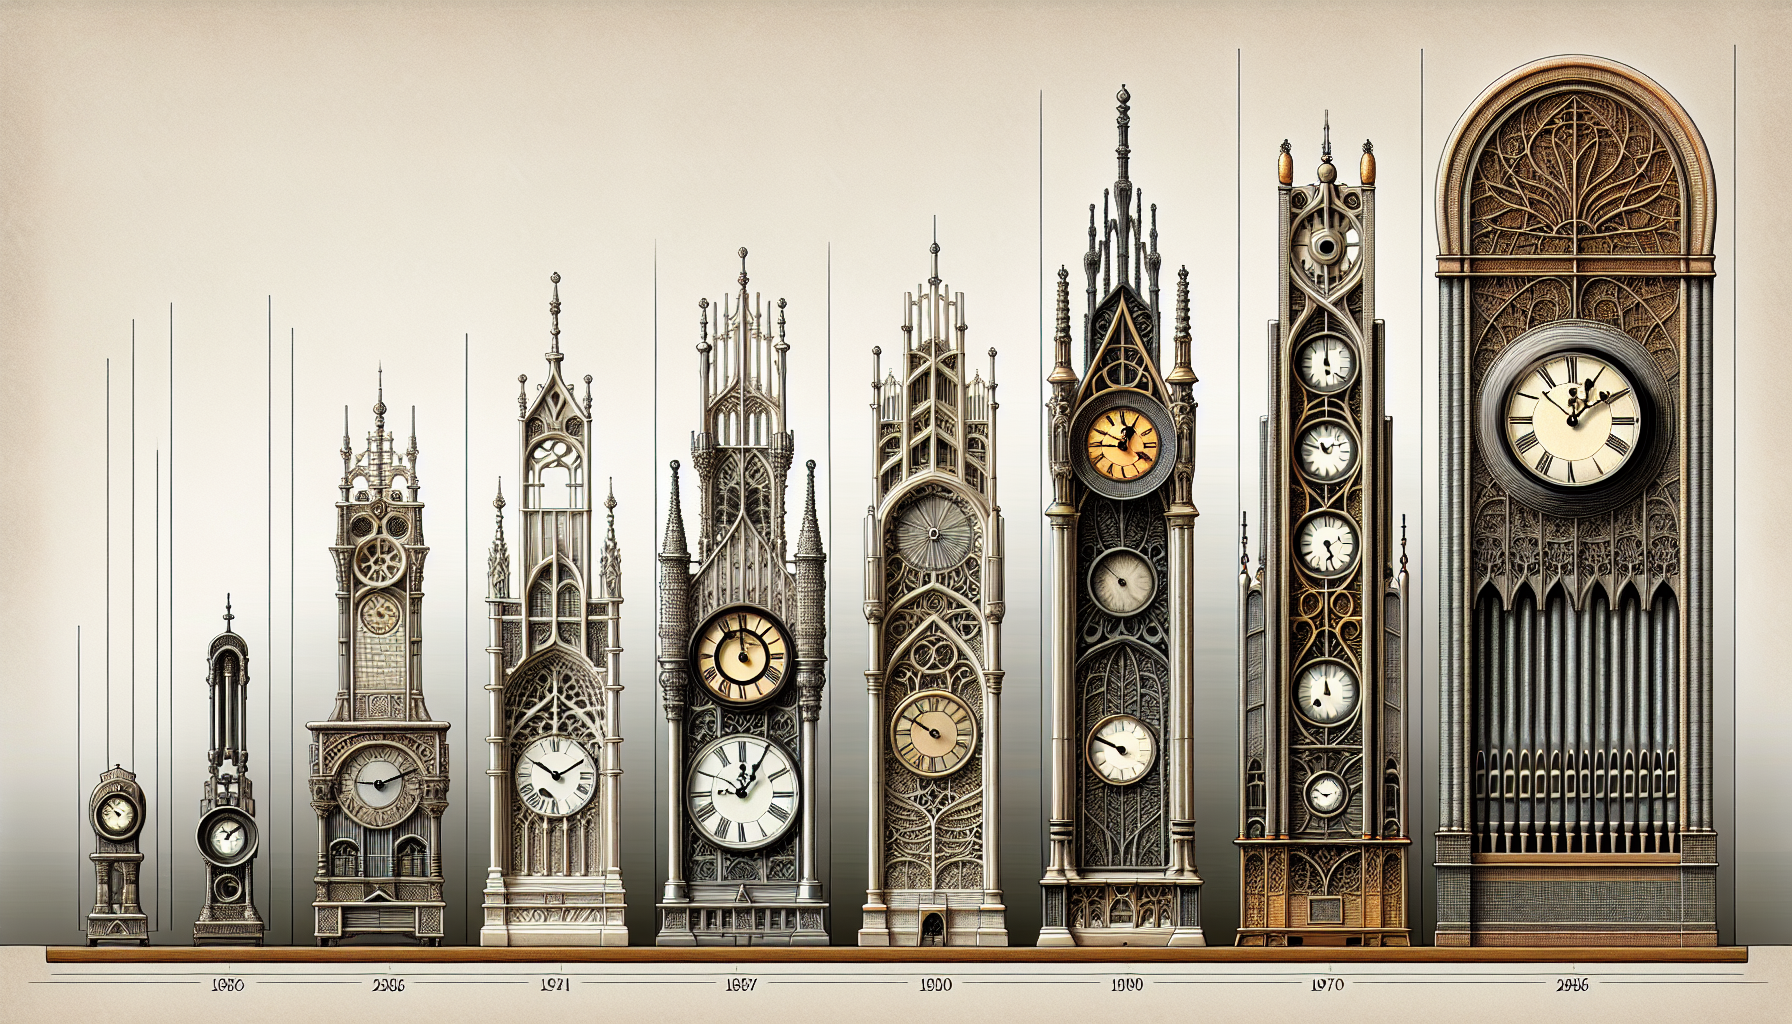 Evolution of mantel clock designs